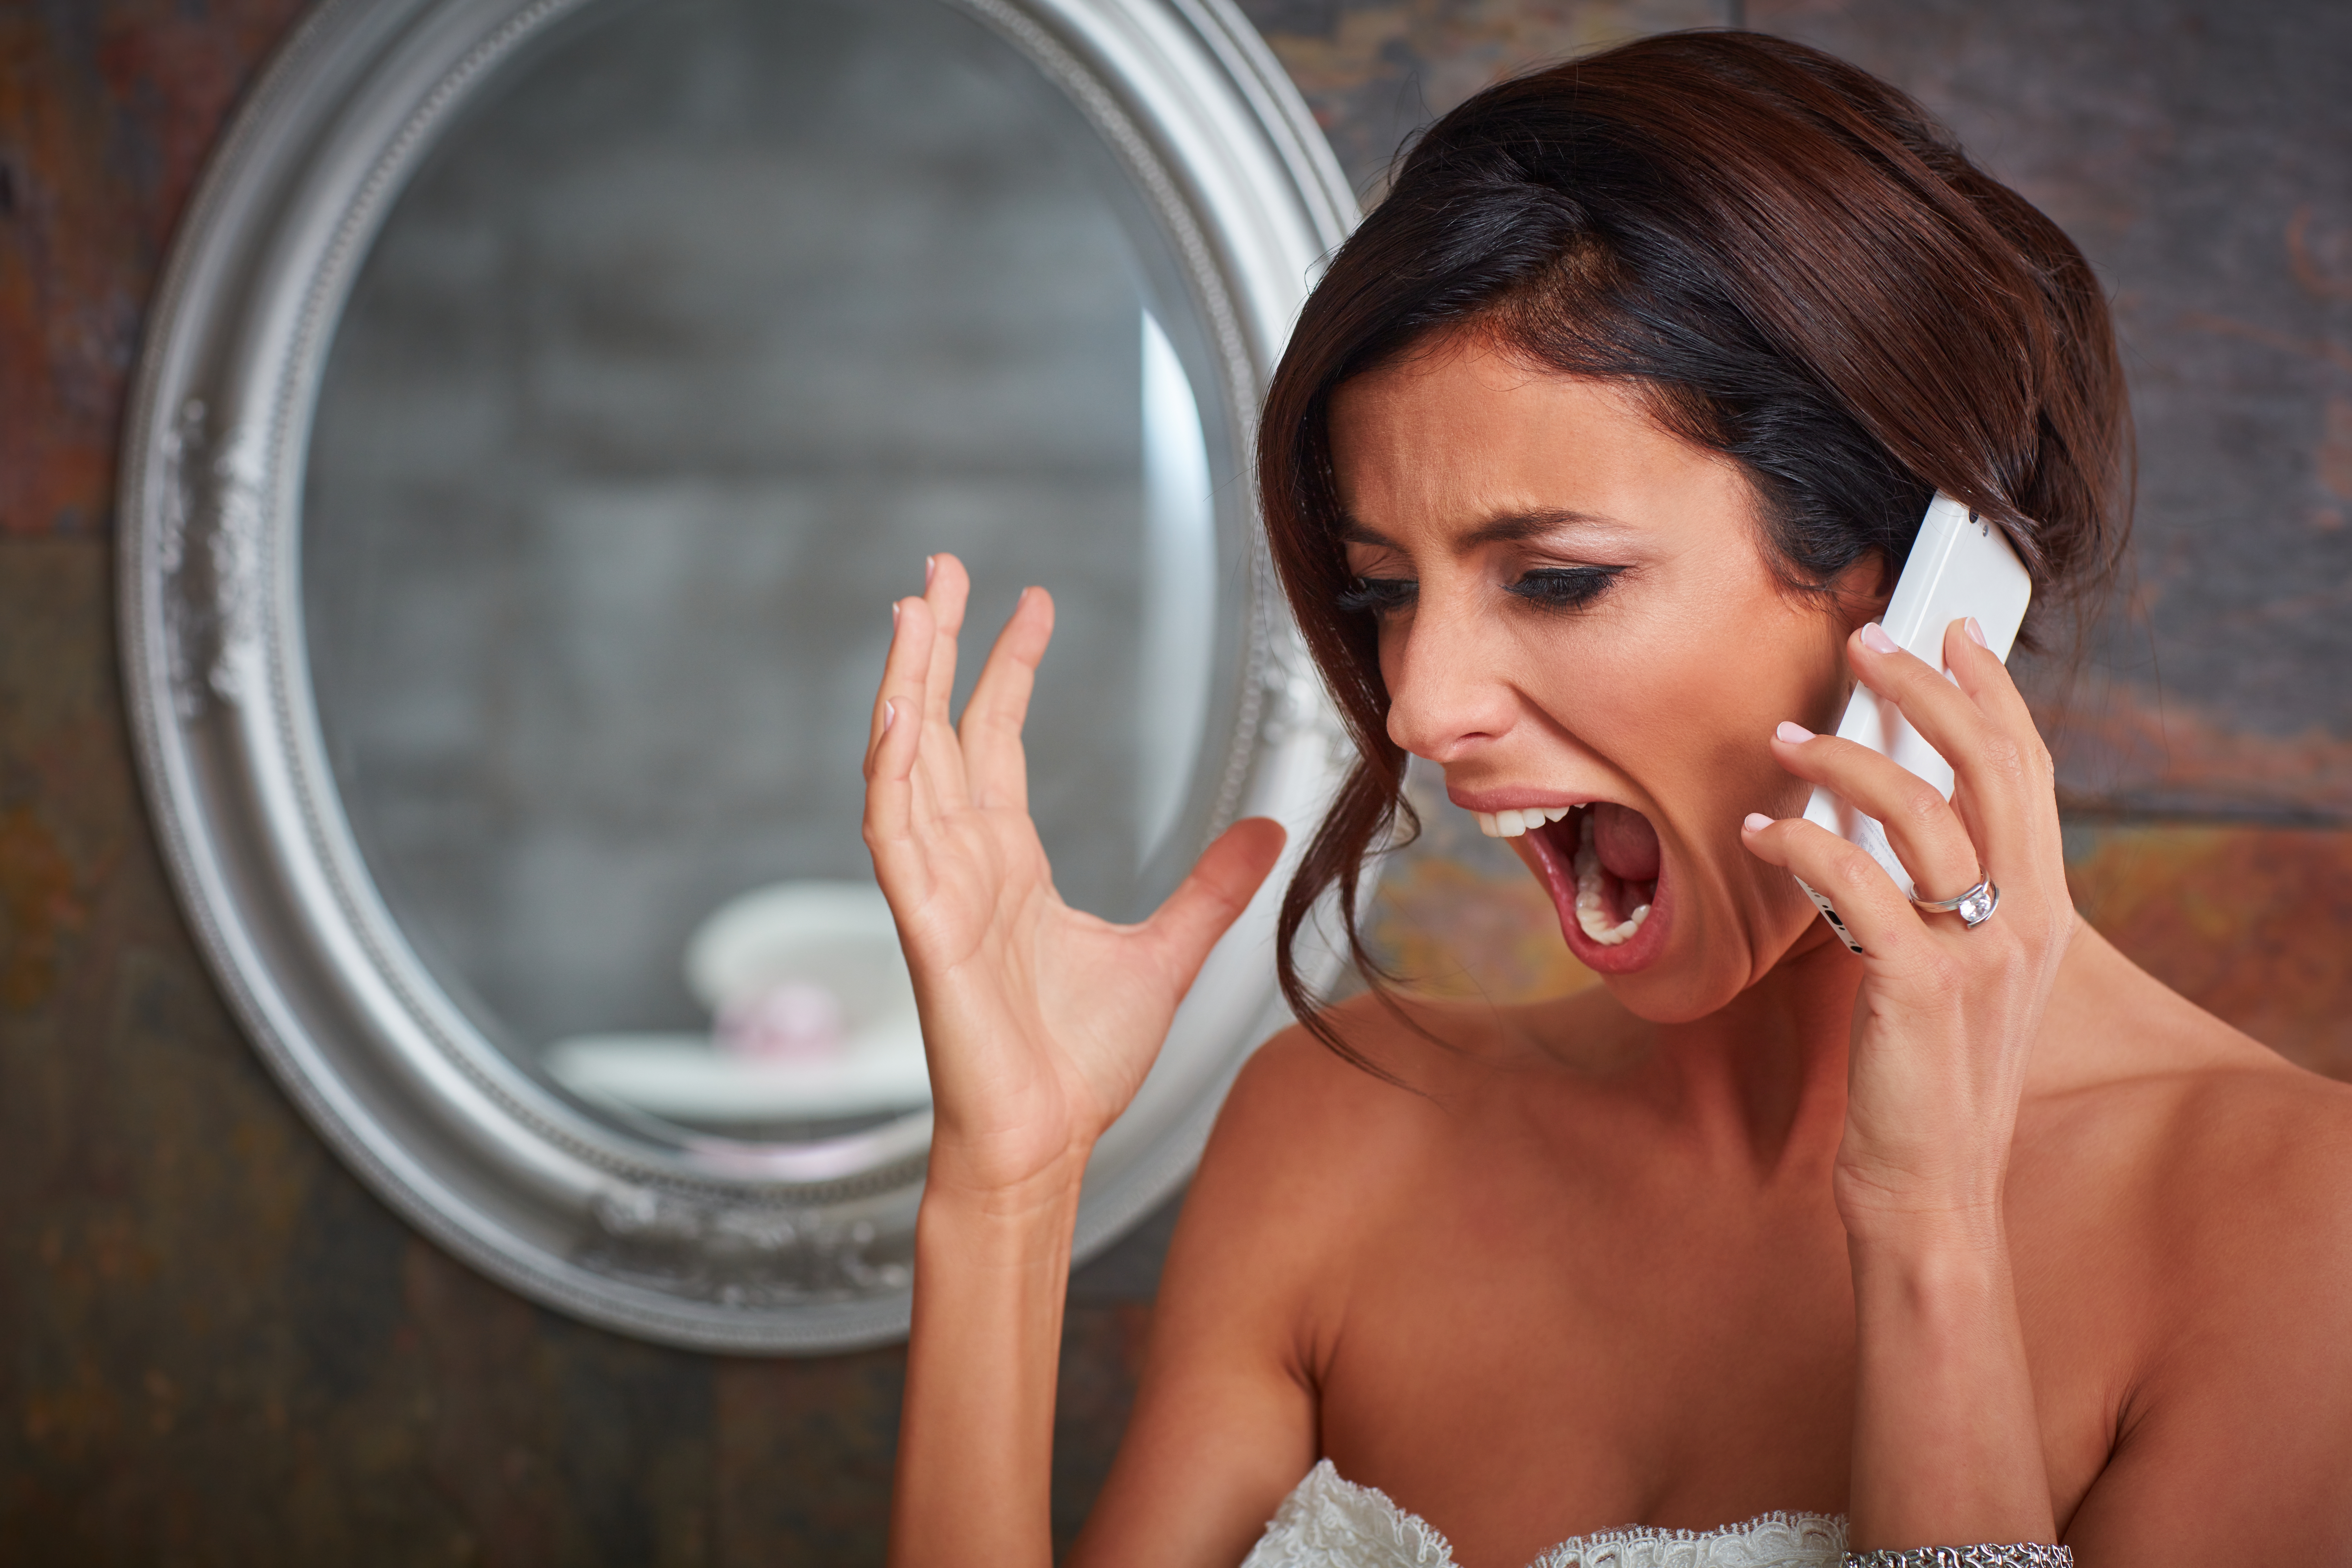 Une mariée qui crie au téléphone | Source : Shutterstock